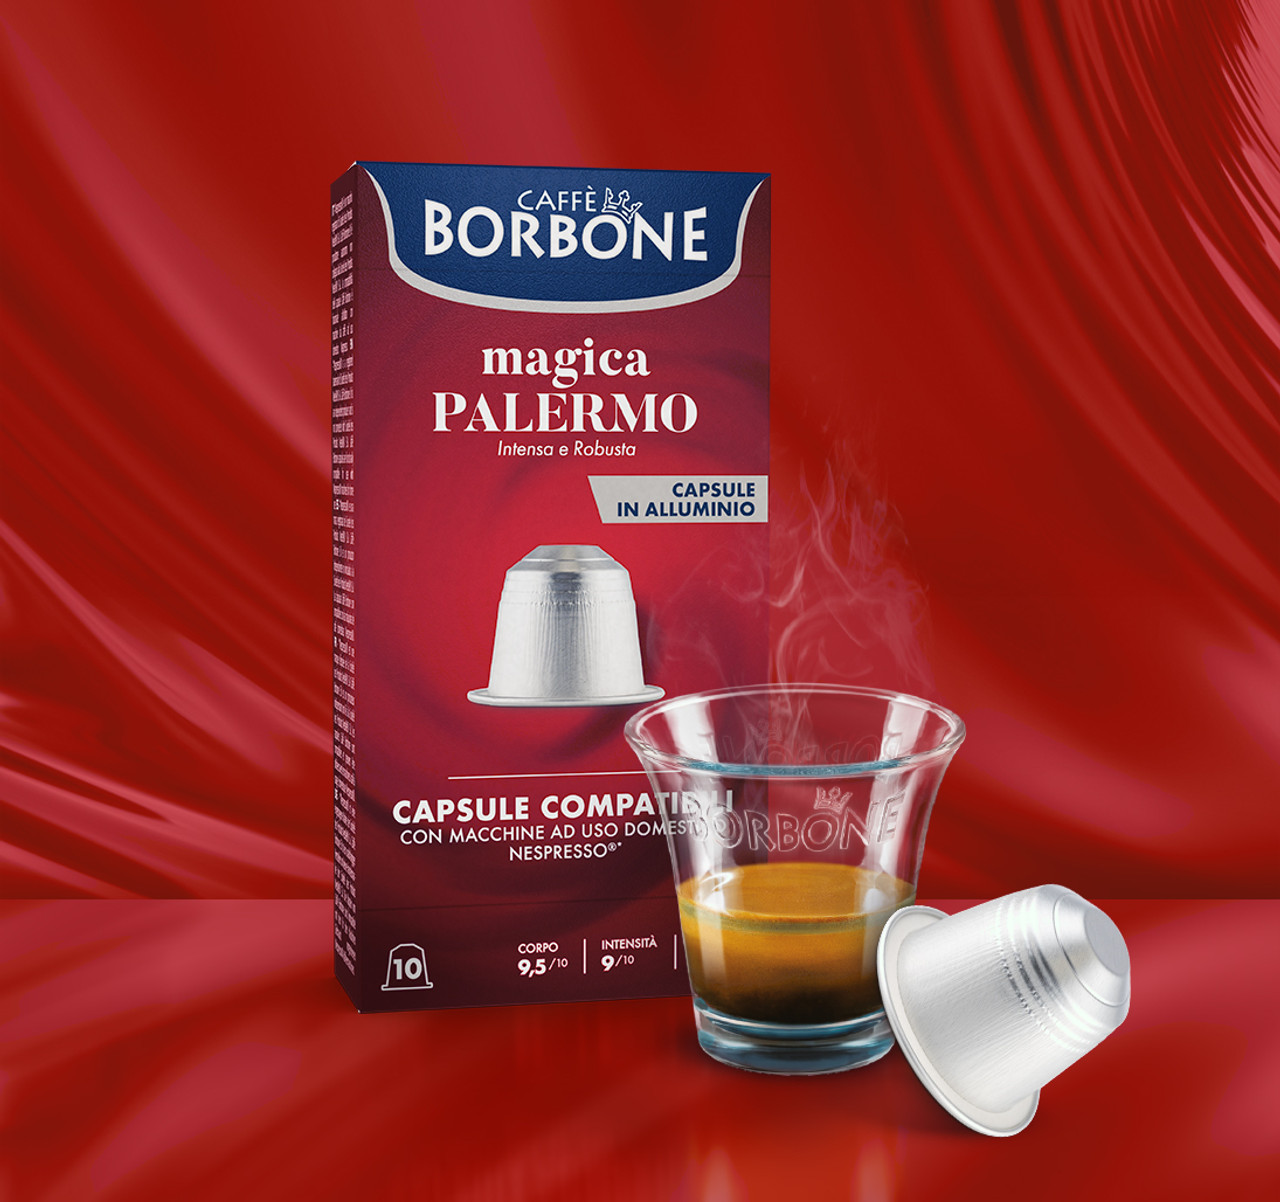 100 cápsulas de café Borbone REspresso Black blend compatibles con Nespresso